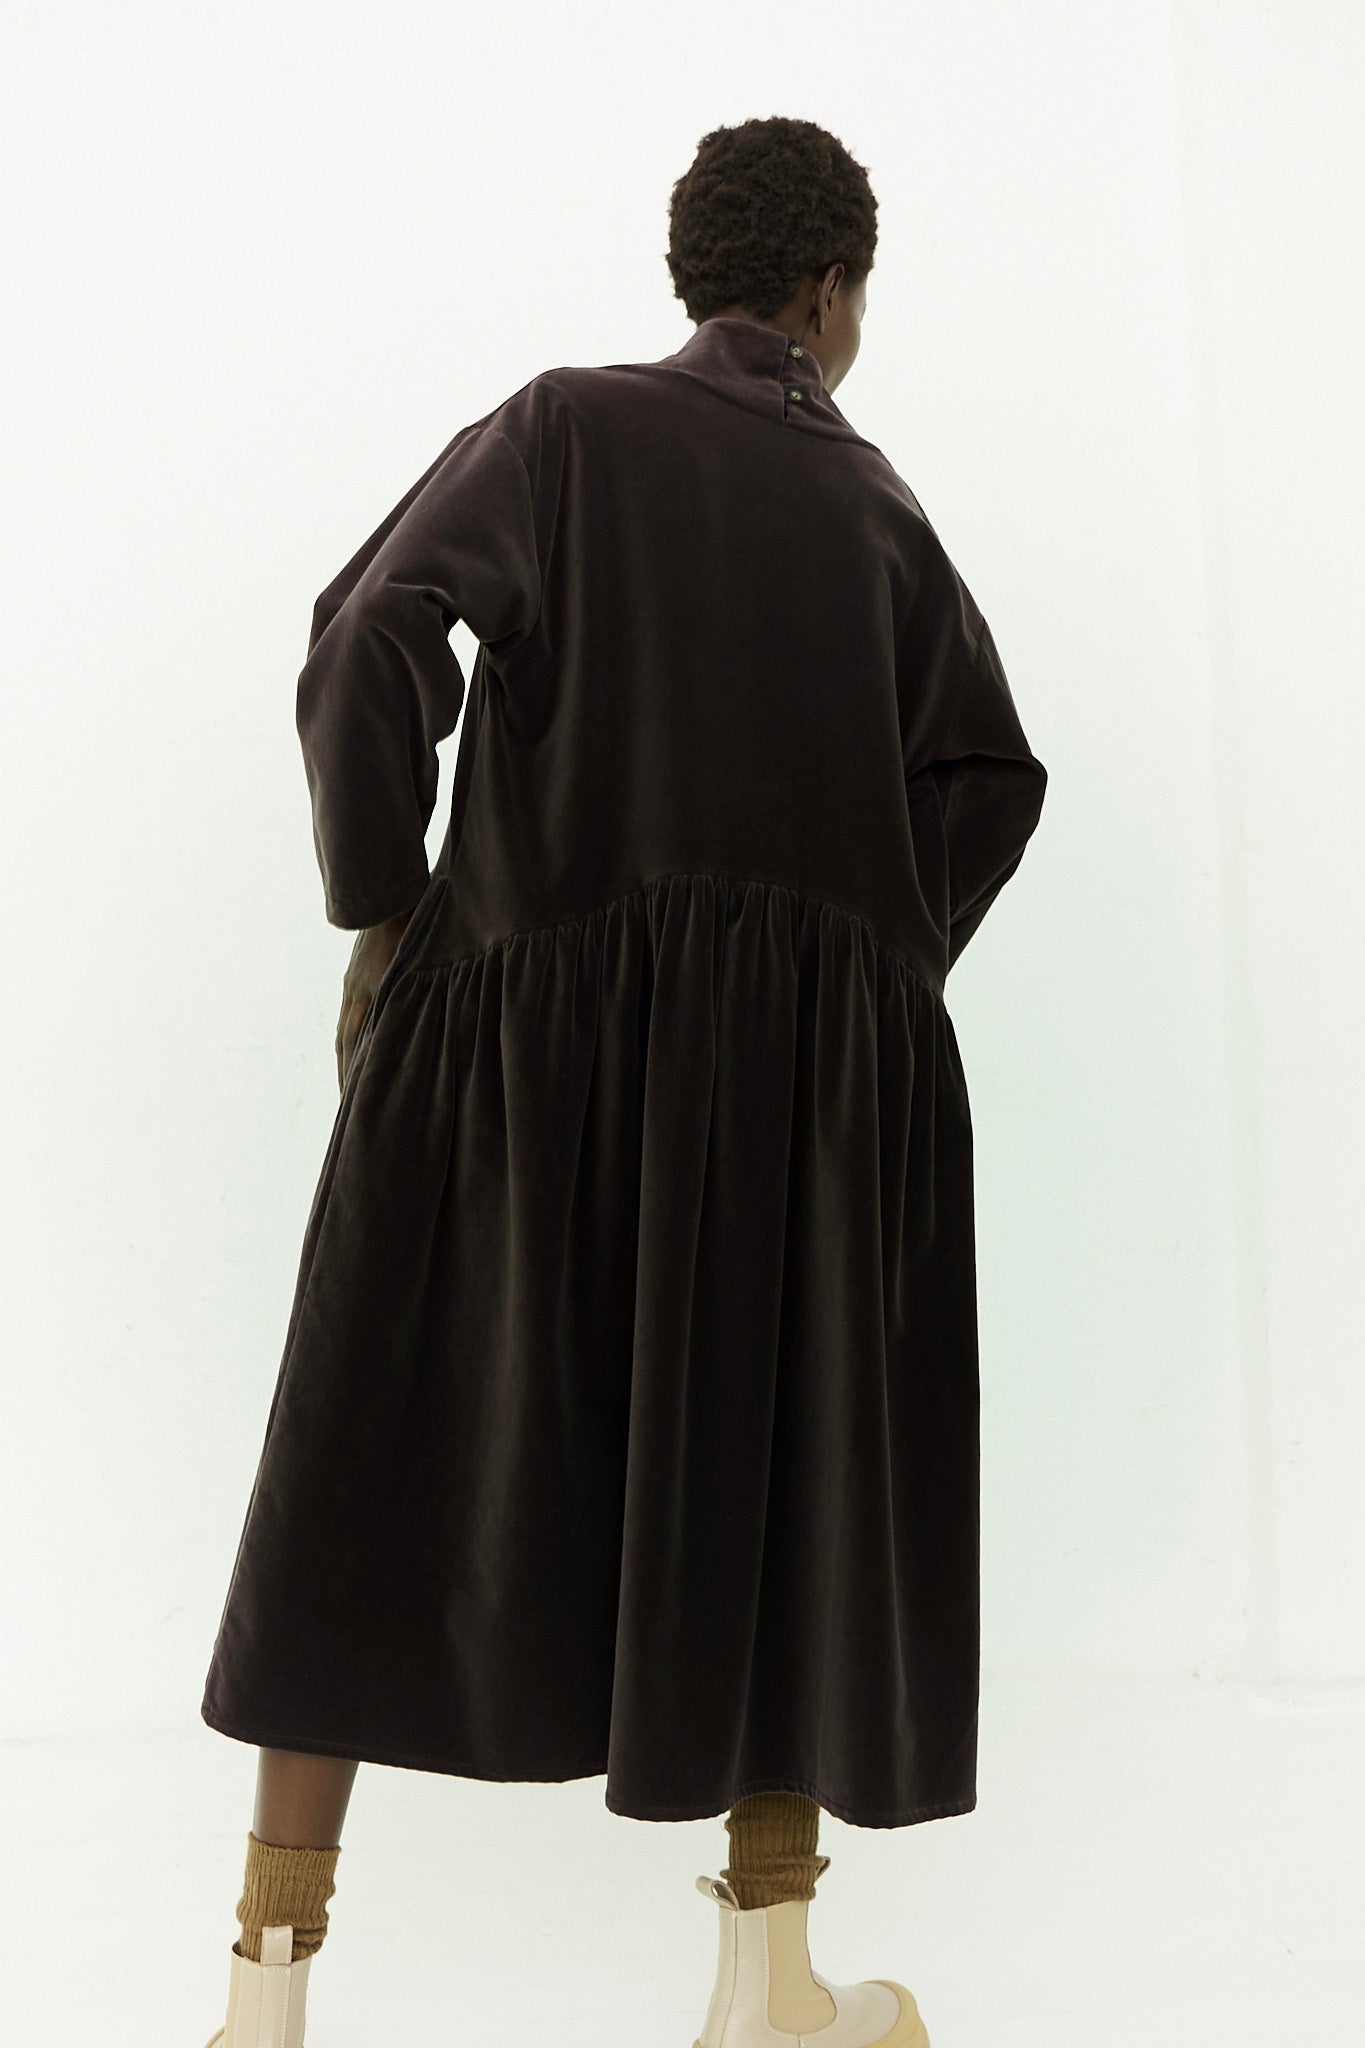 The back of a woman wearing a black velvet dress. Designed by Black Crane.